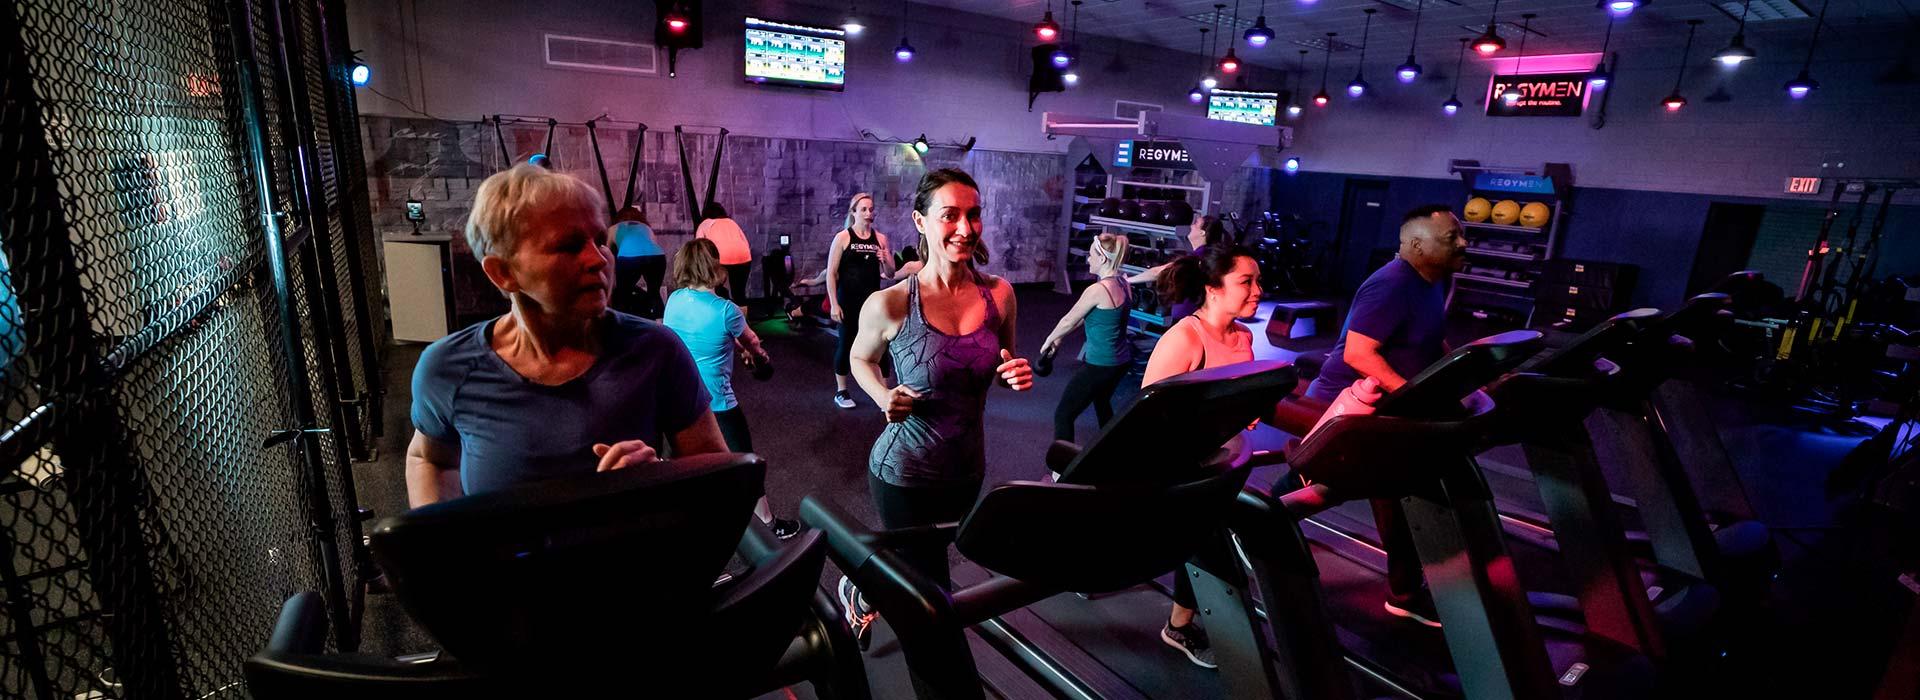 People running on treadmills in REGYMEN fitness workout